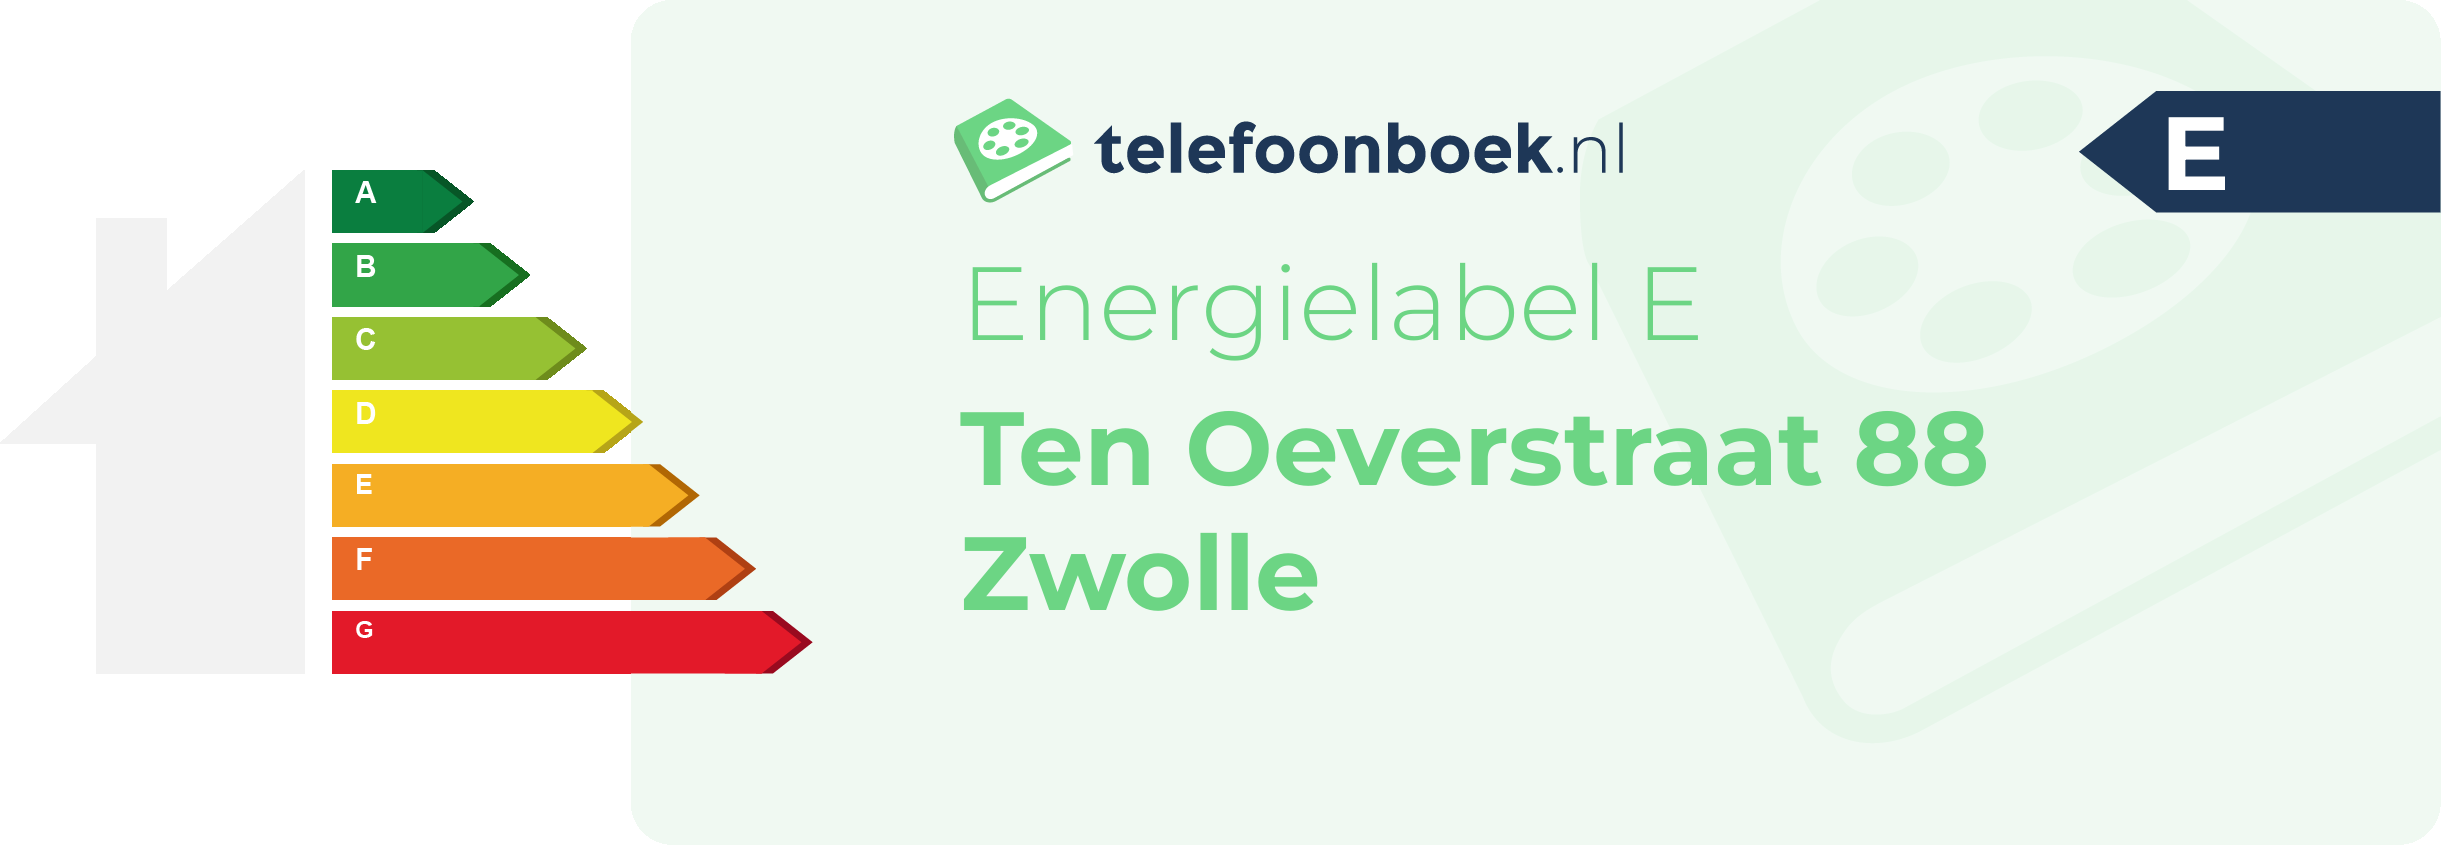 Energielabel Ten Oeverstraat 88 Zwolle